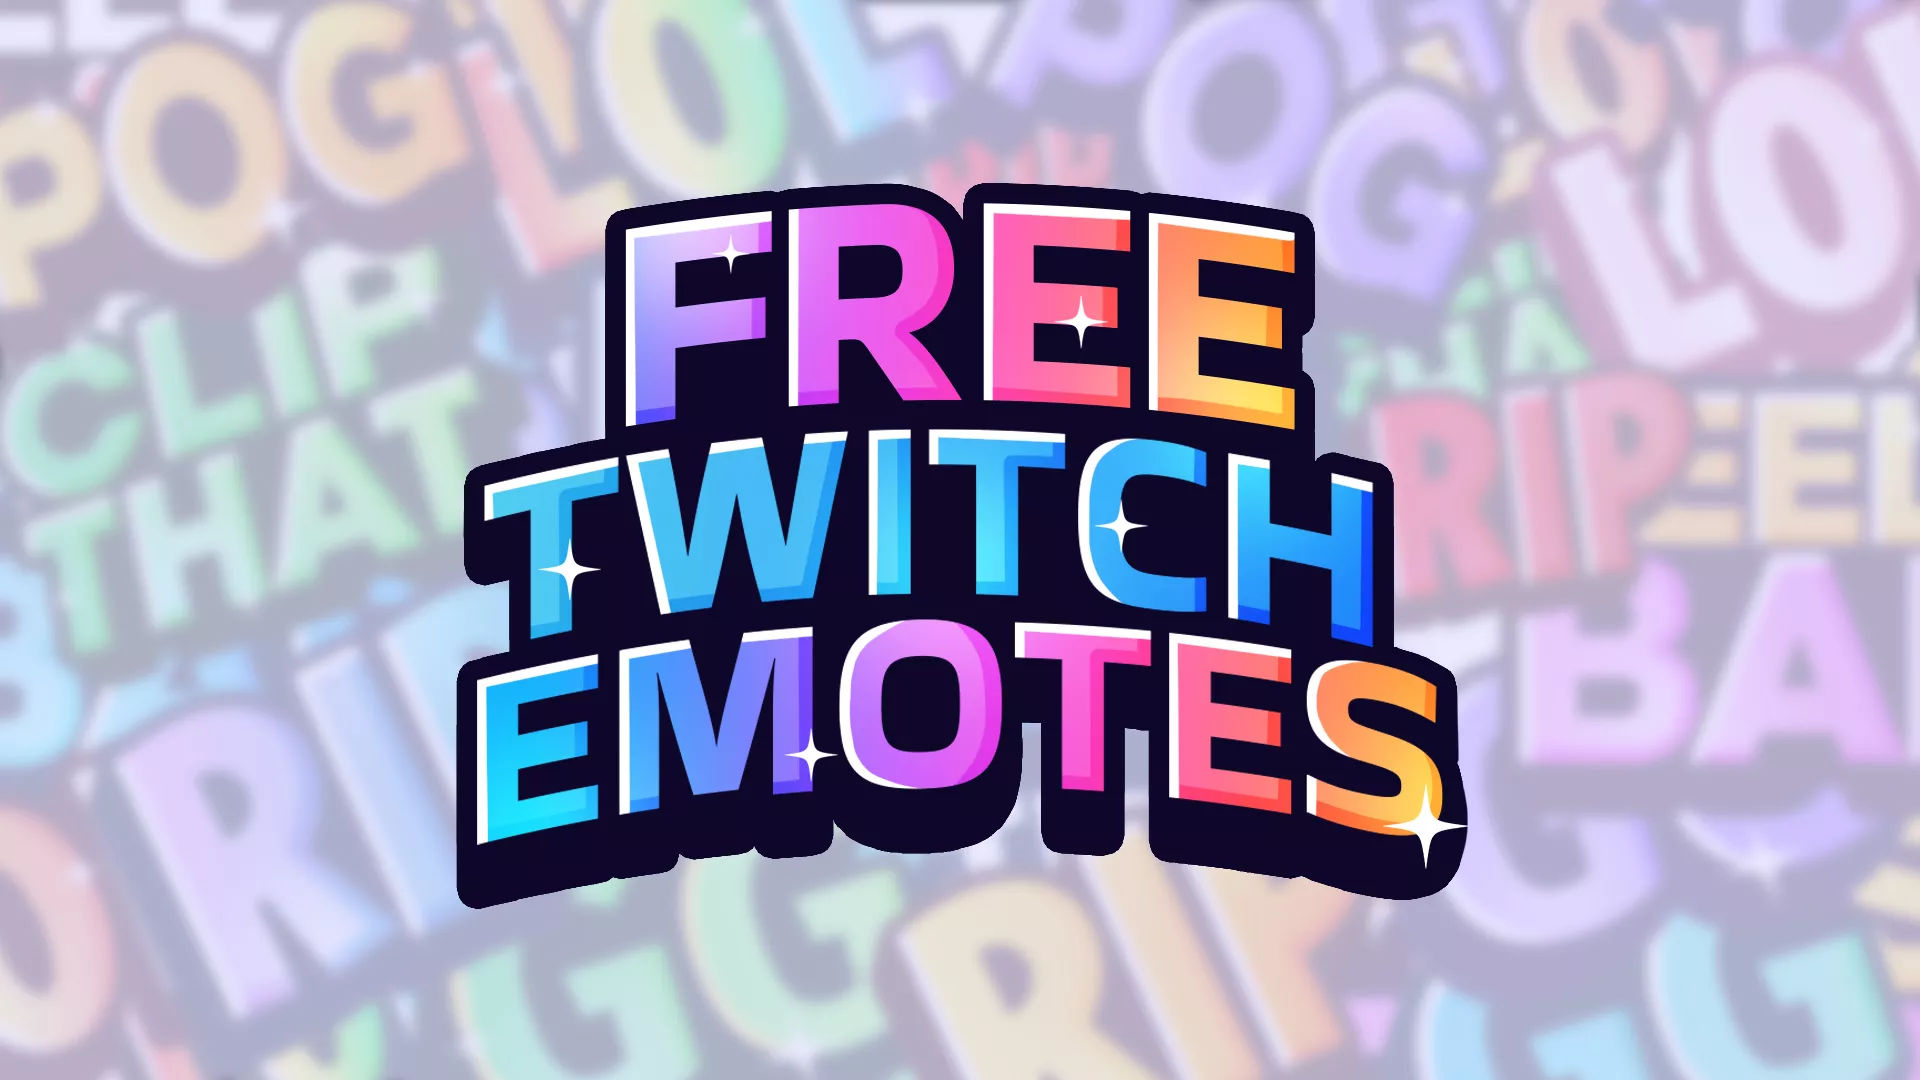 Free Twitch Emotes